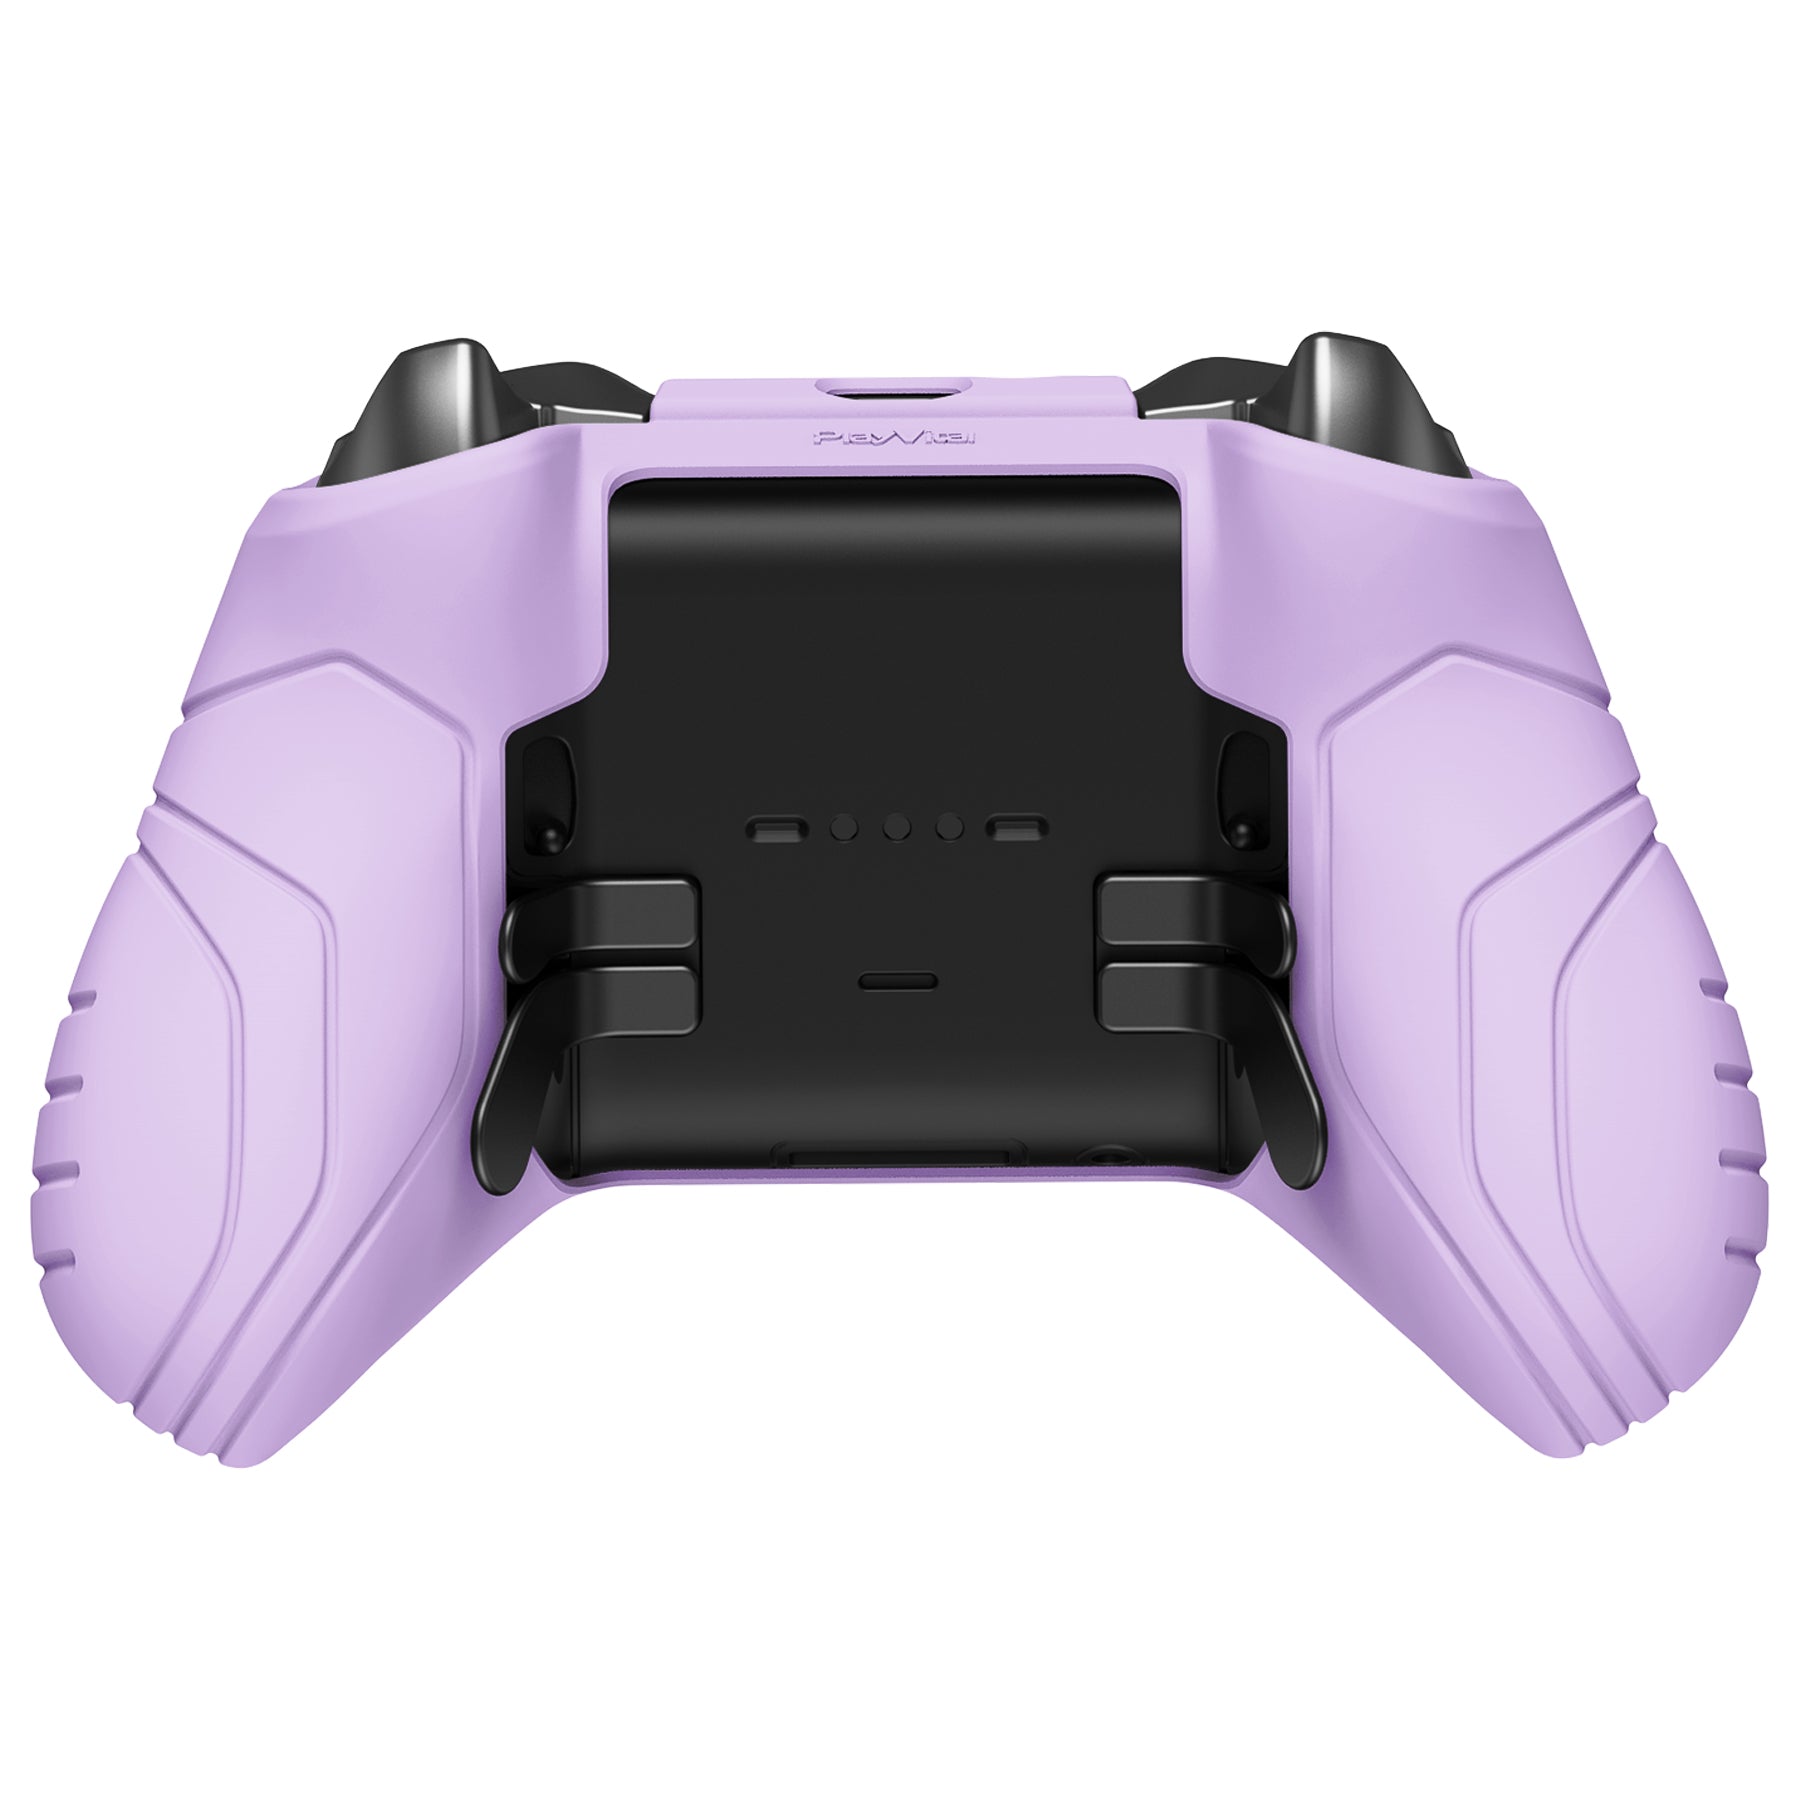 PlayVital Samurai Edition Anti Slip Silicone Case Cover for Xbox Elite Wireless Controller Series 2, Ergonomic Soft Rubber Skin Protector for Xbox Elite Series 2 with Thumb Grip Caps - Mauve Purple - XBE2M010 playvital